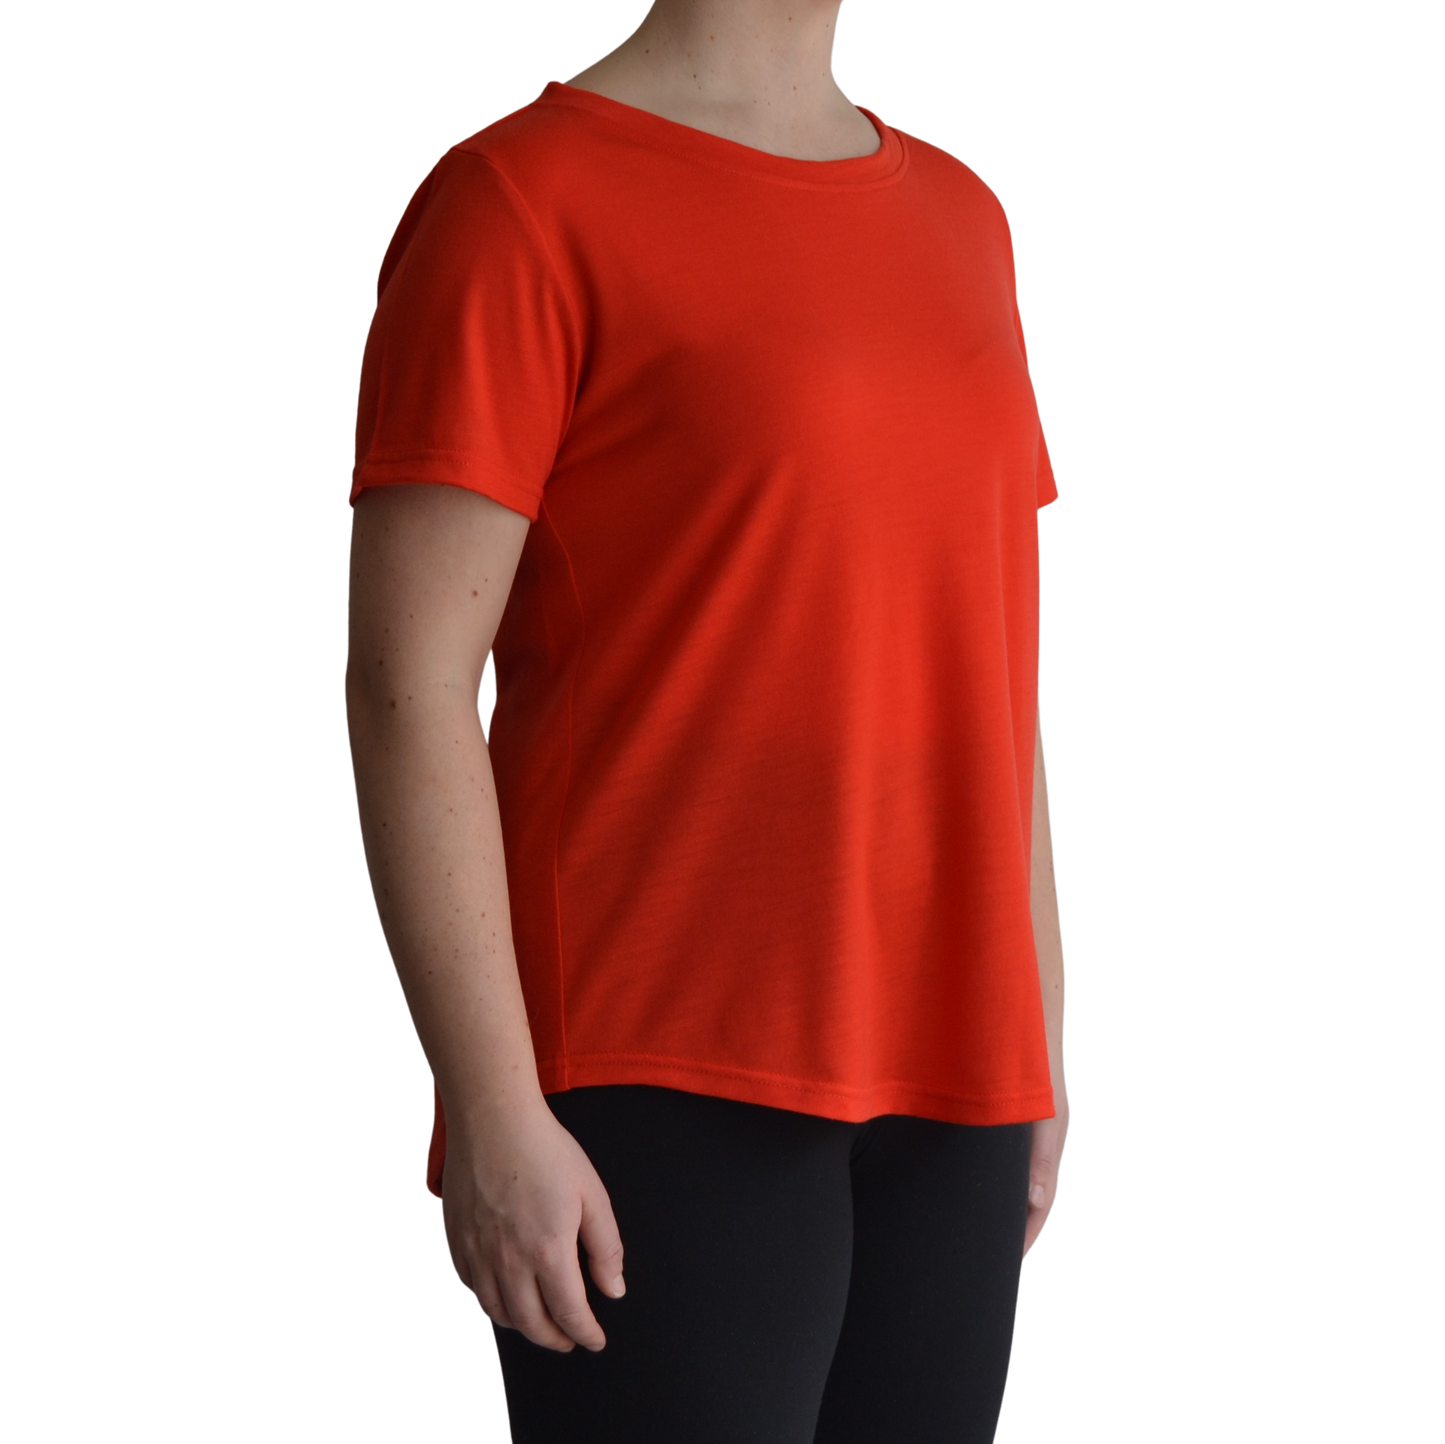 Links merino short sleeve t-shirt in mandarin. Model faces forward on a 45 degree angle